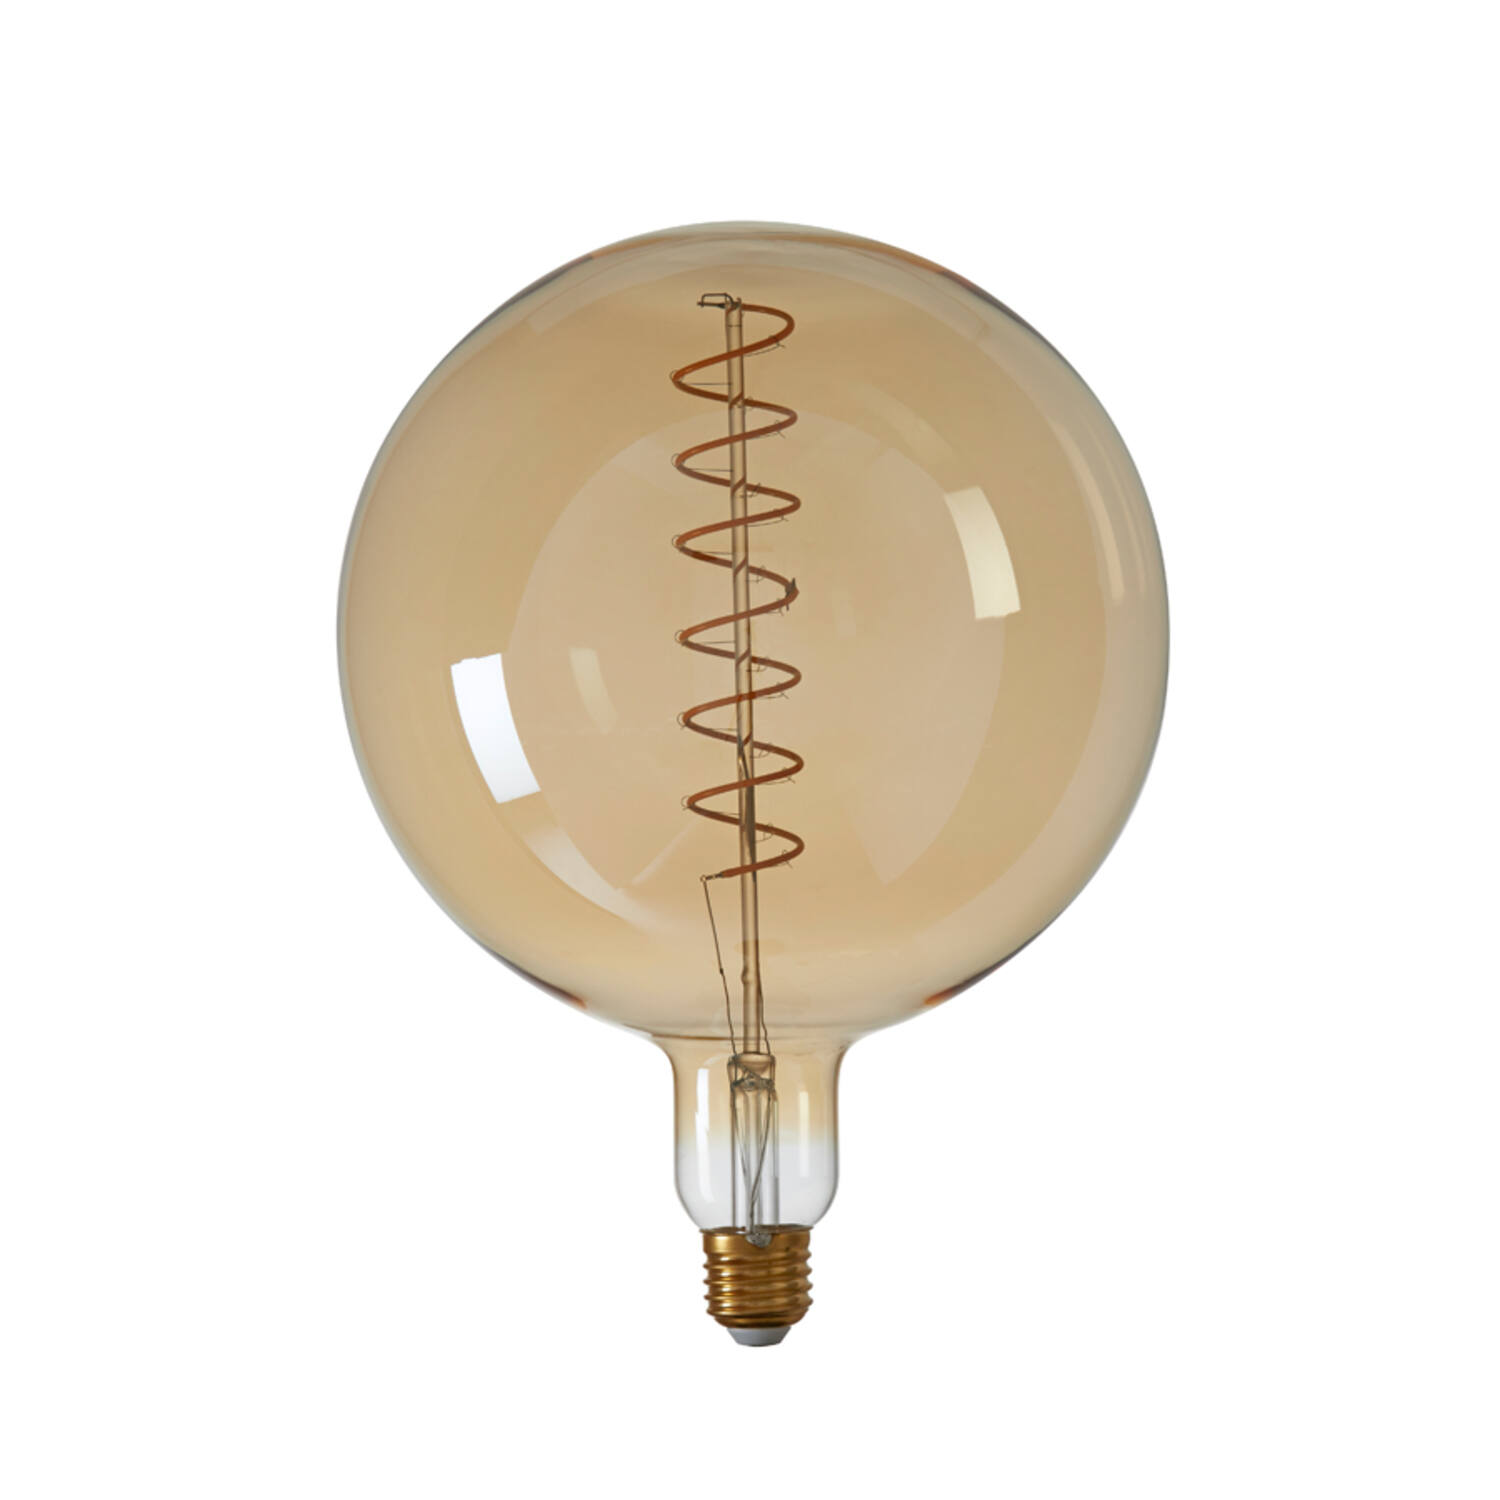 Deco LED globe Ø20x28 cm LIGHT 4W amber E27 dimmable